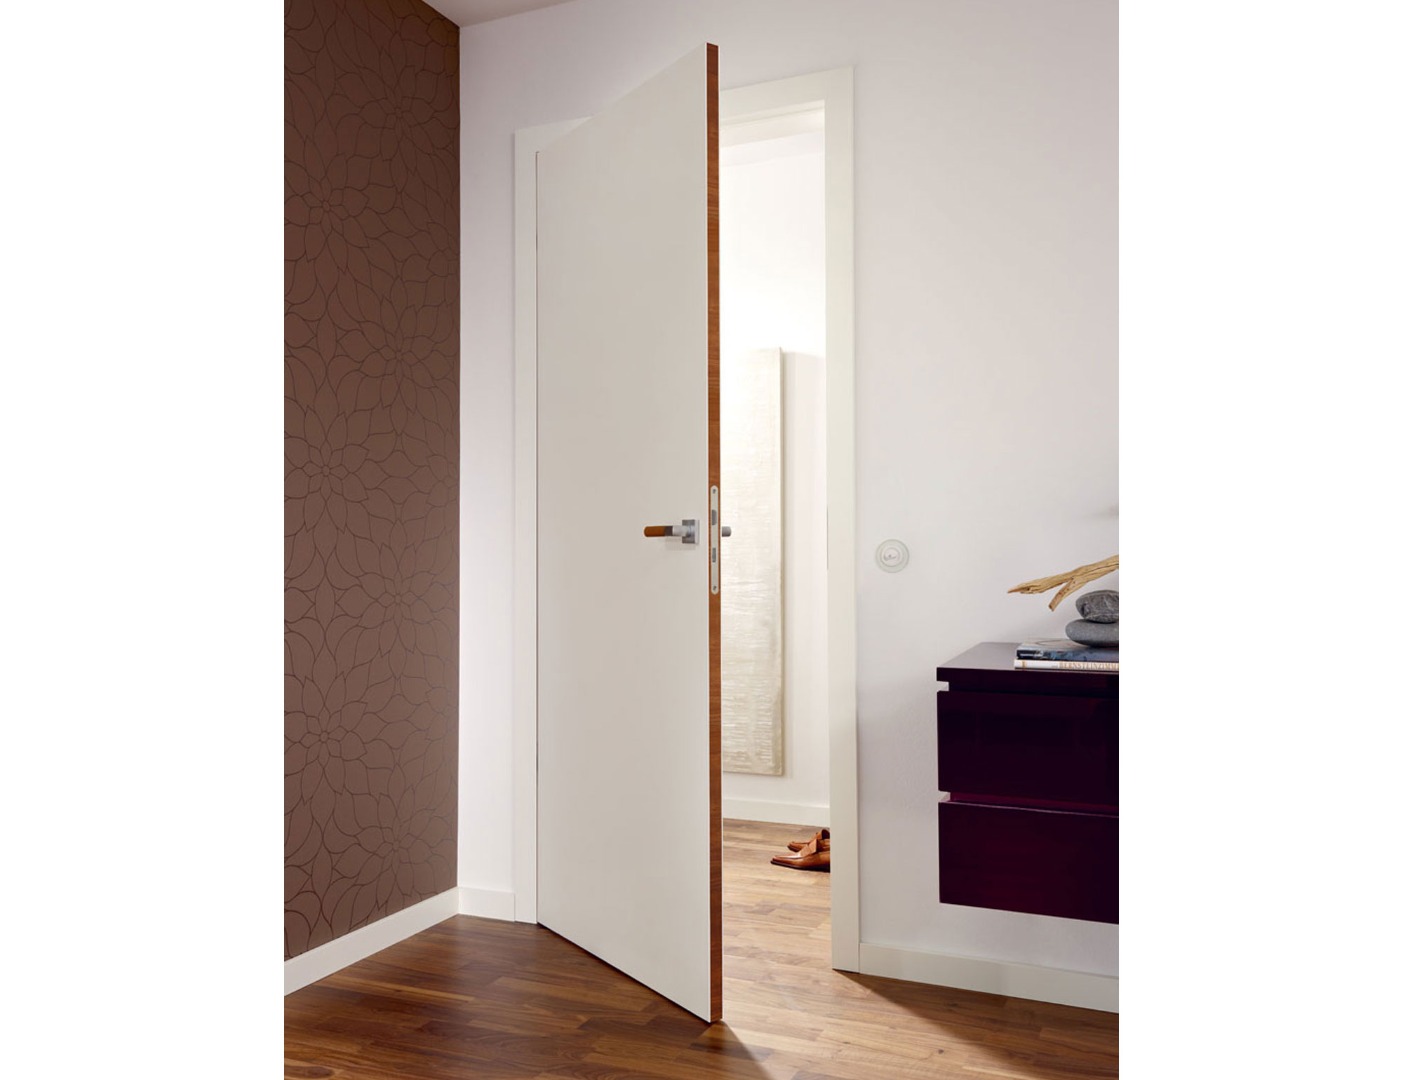 White Internal Door Designs - Sliding Internal Doors - Internal Sliding Grooved Doors